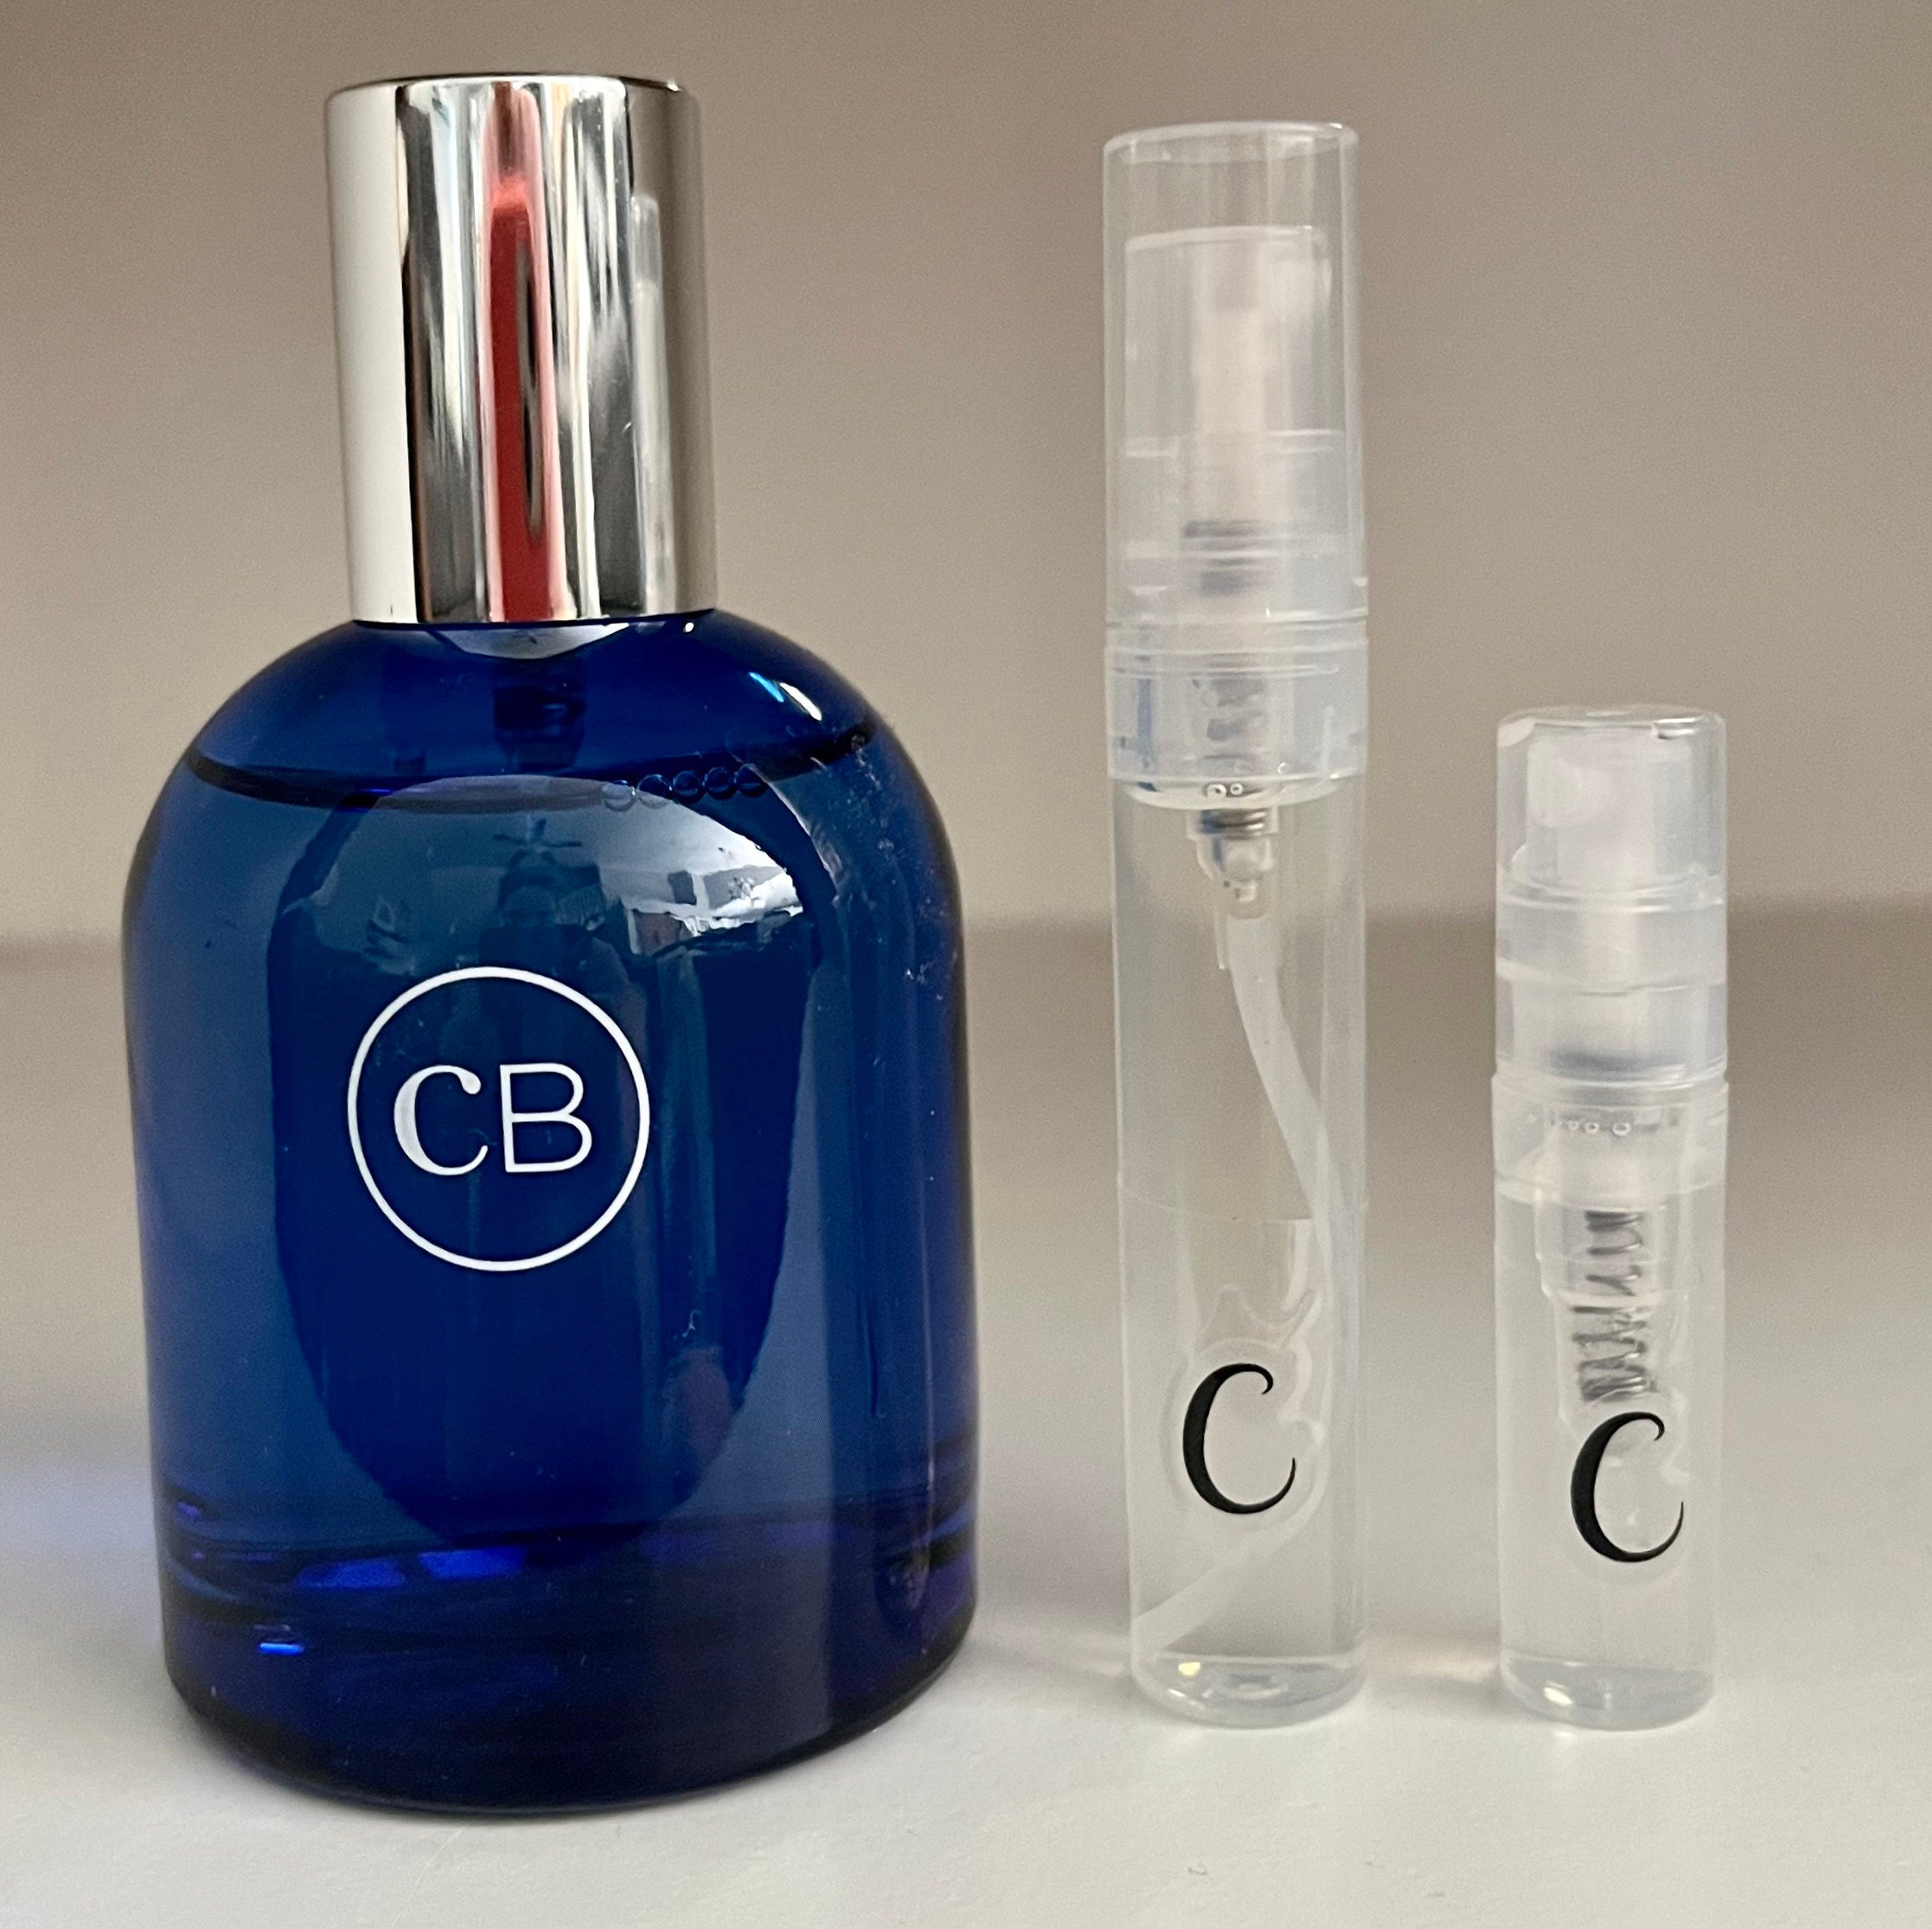  Capri Blue Reed Oil Diffuser - Volcano - Comes with Diffuser  Sticks, Oil, and Glass Bottle - Aromatherapy Diffuser - 8 Fl Oz - White :  Home & Kitchen